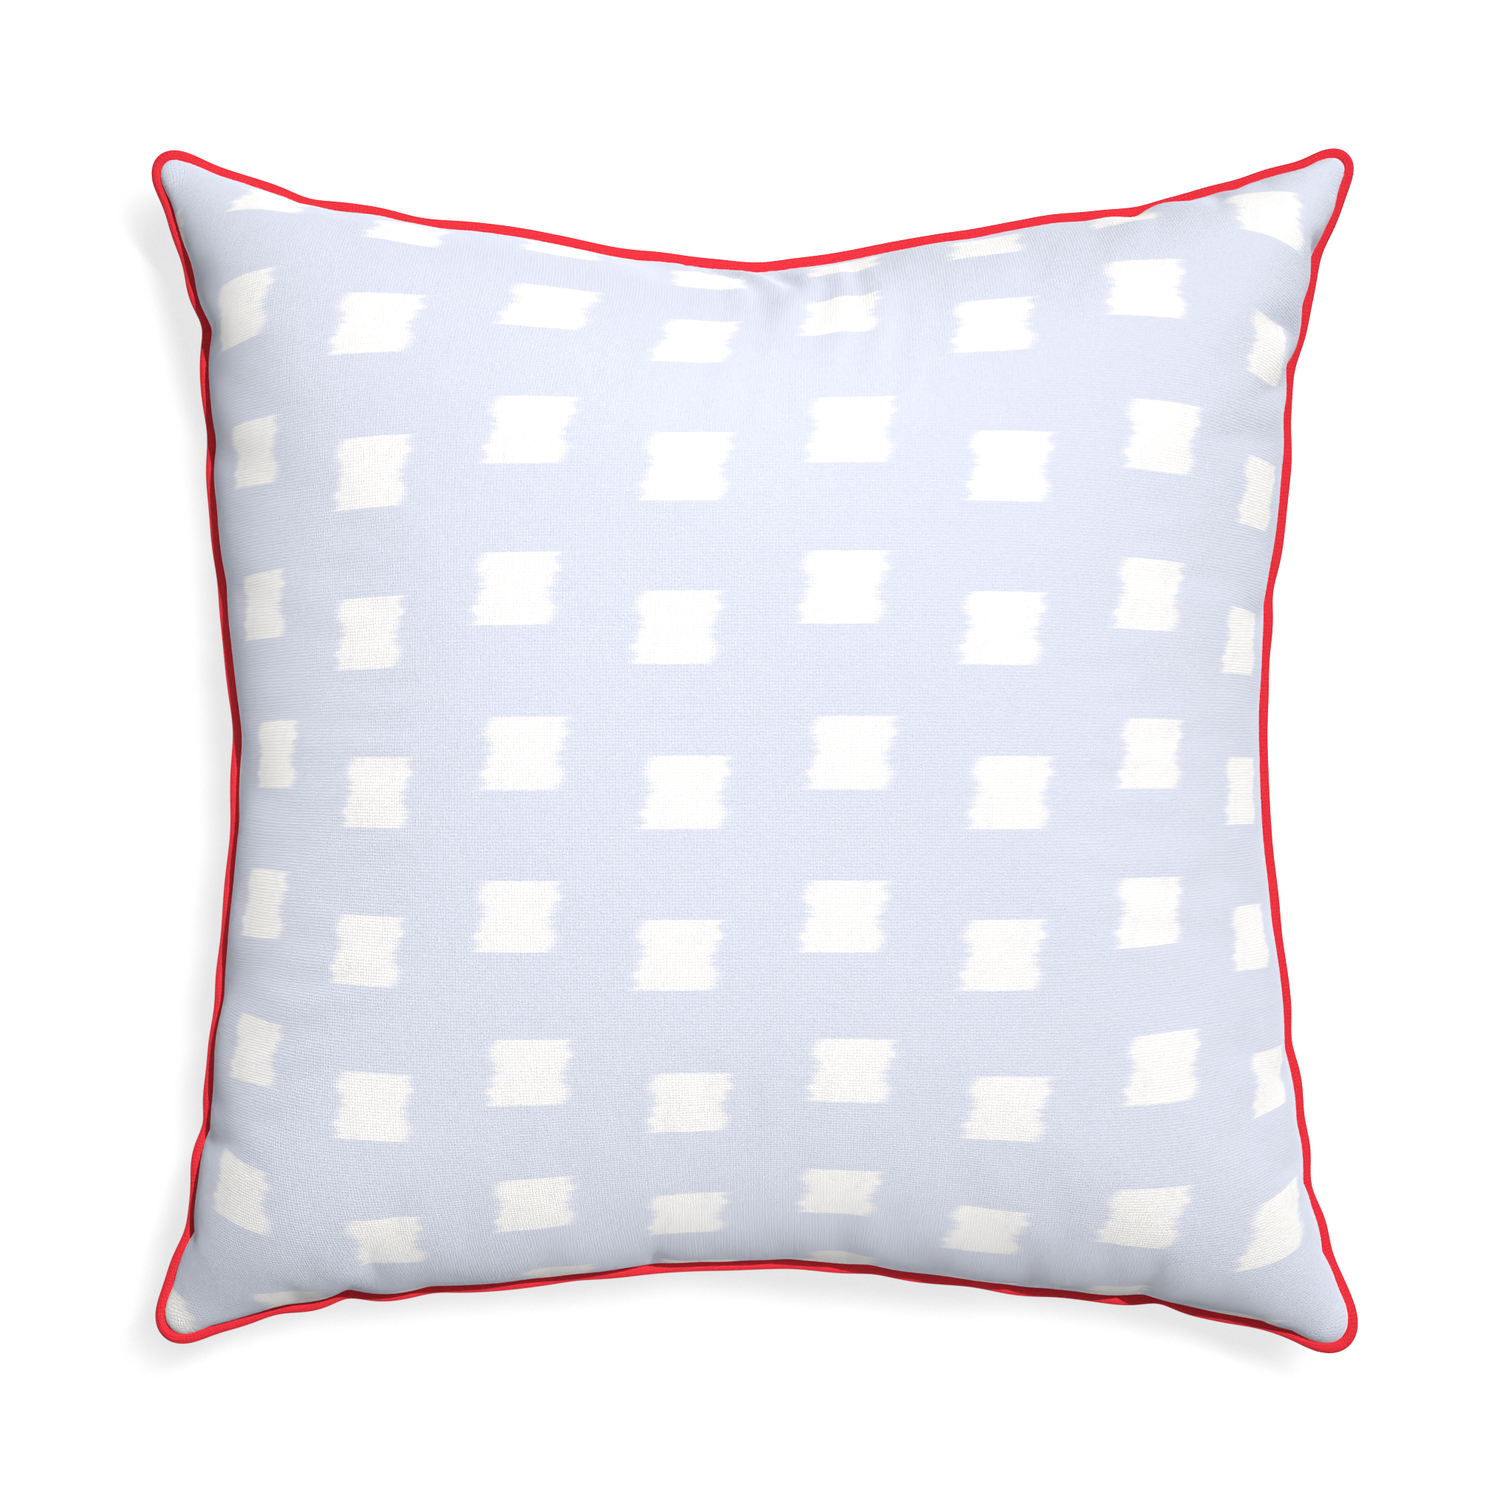 Euro-sham denton custom pillow with cherry piping on white background